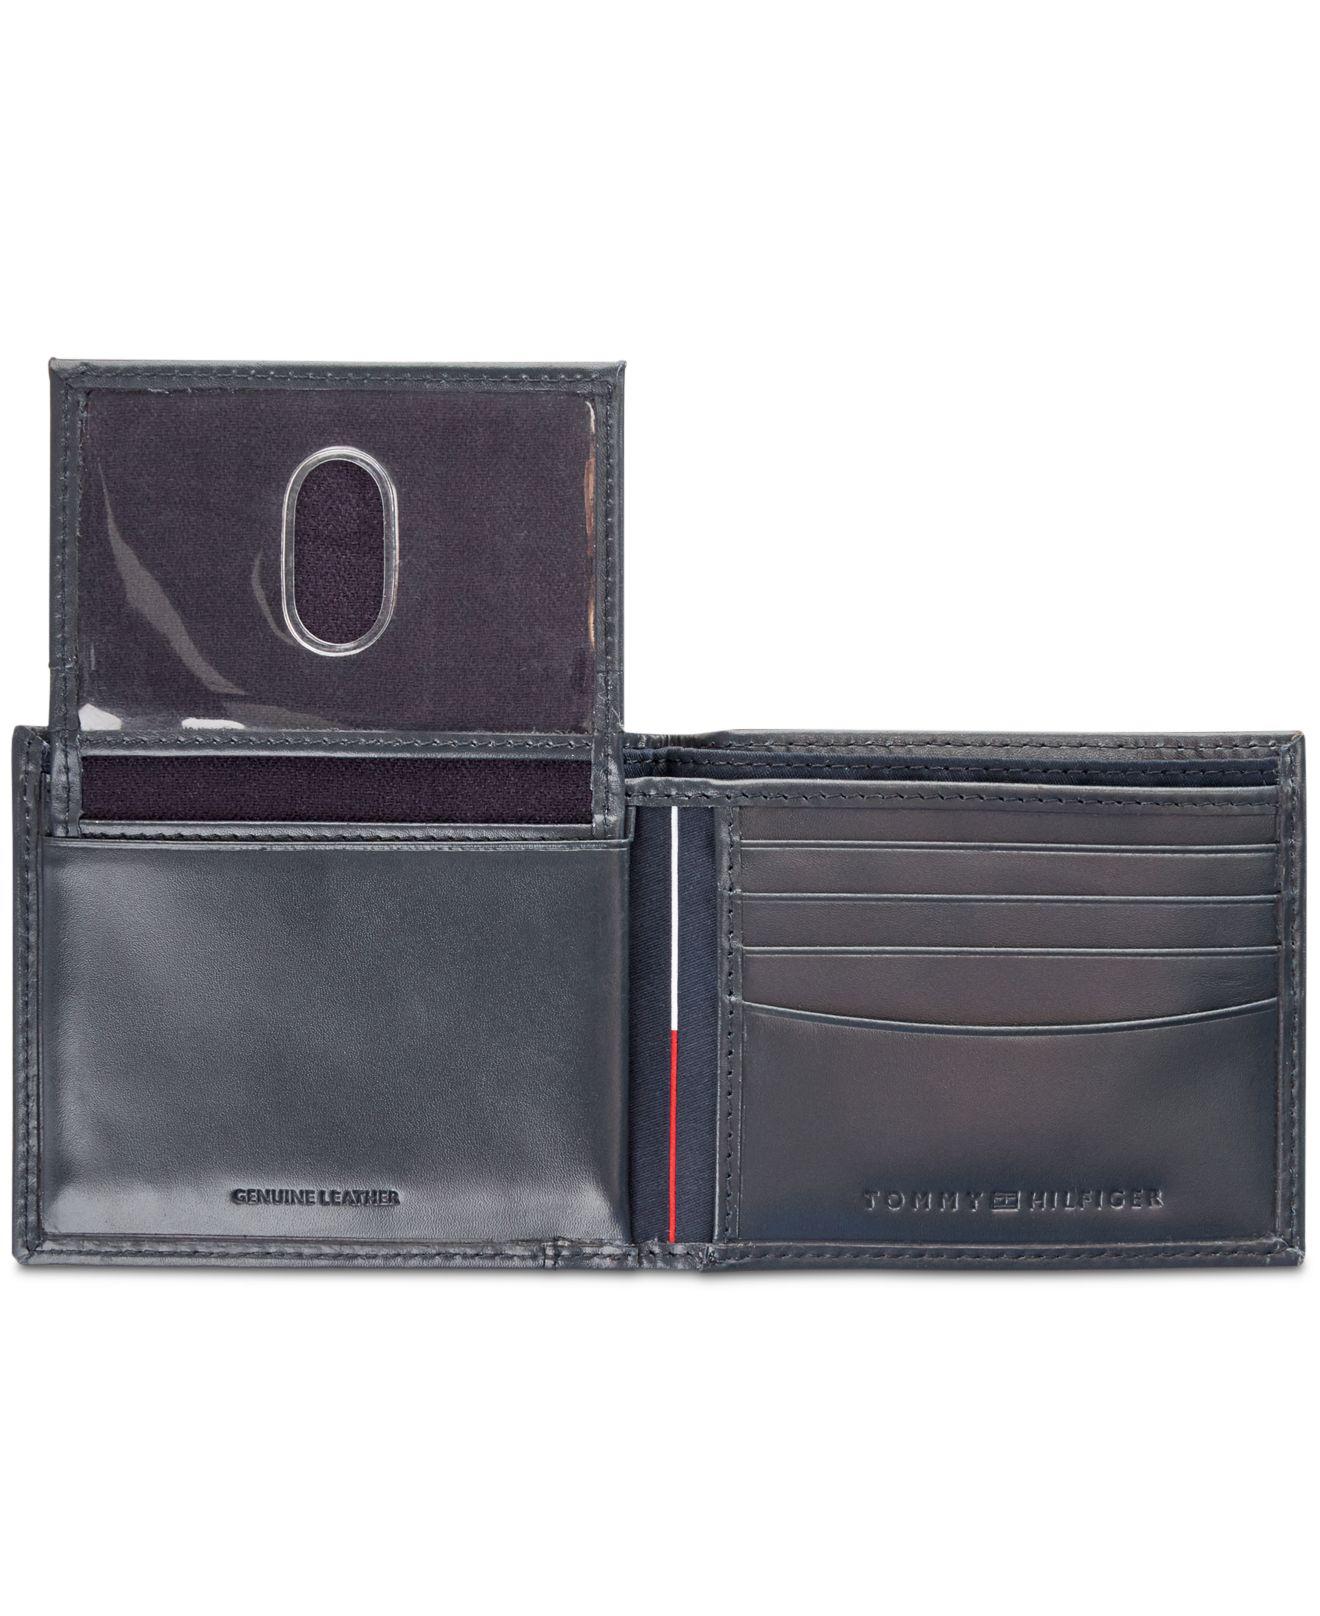 tommy hilfiger cambridge leather wallet